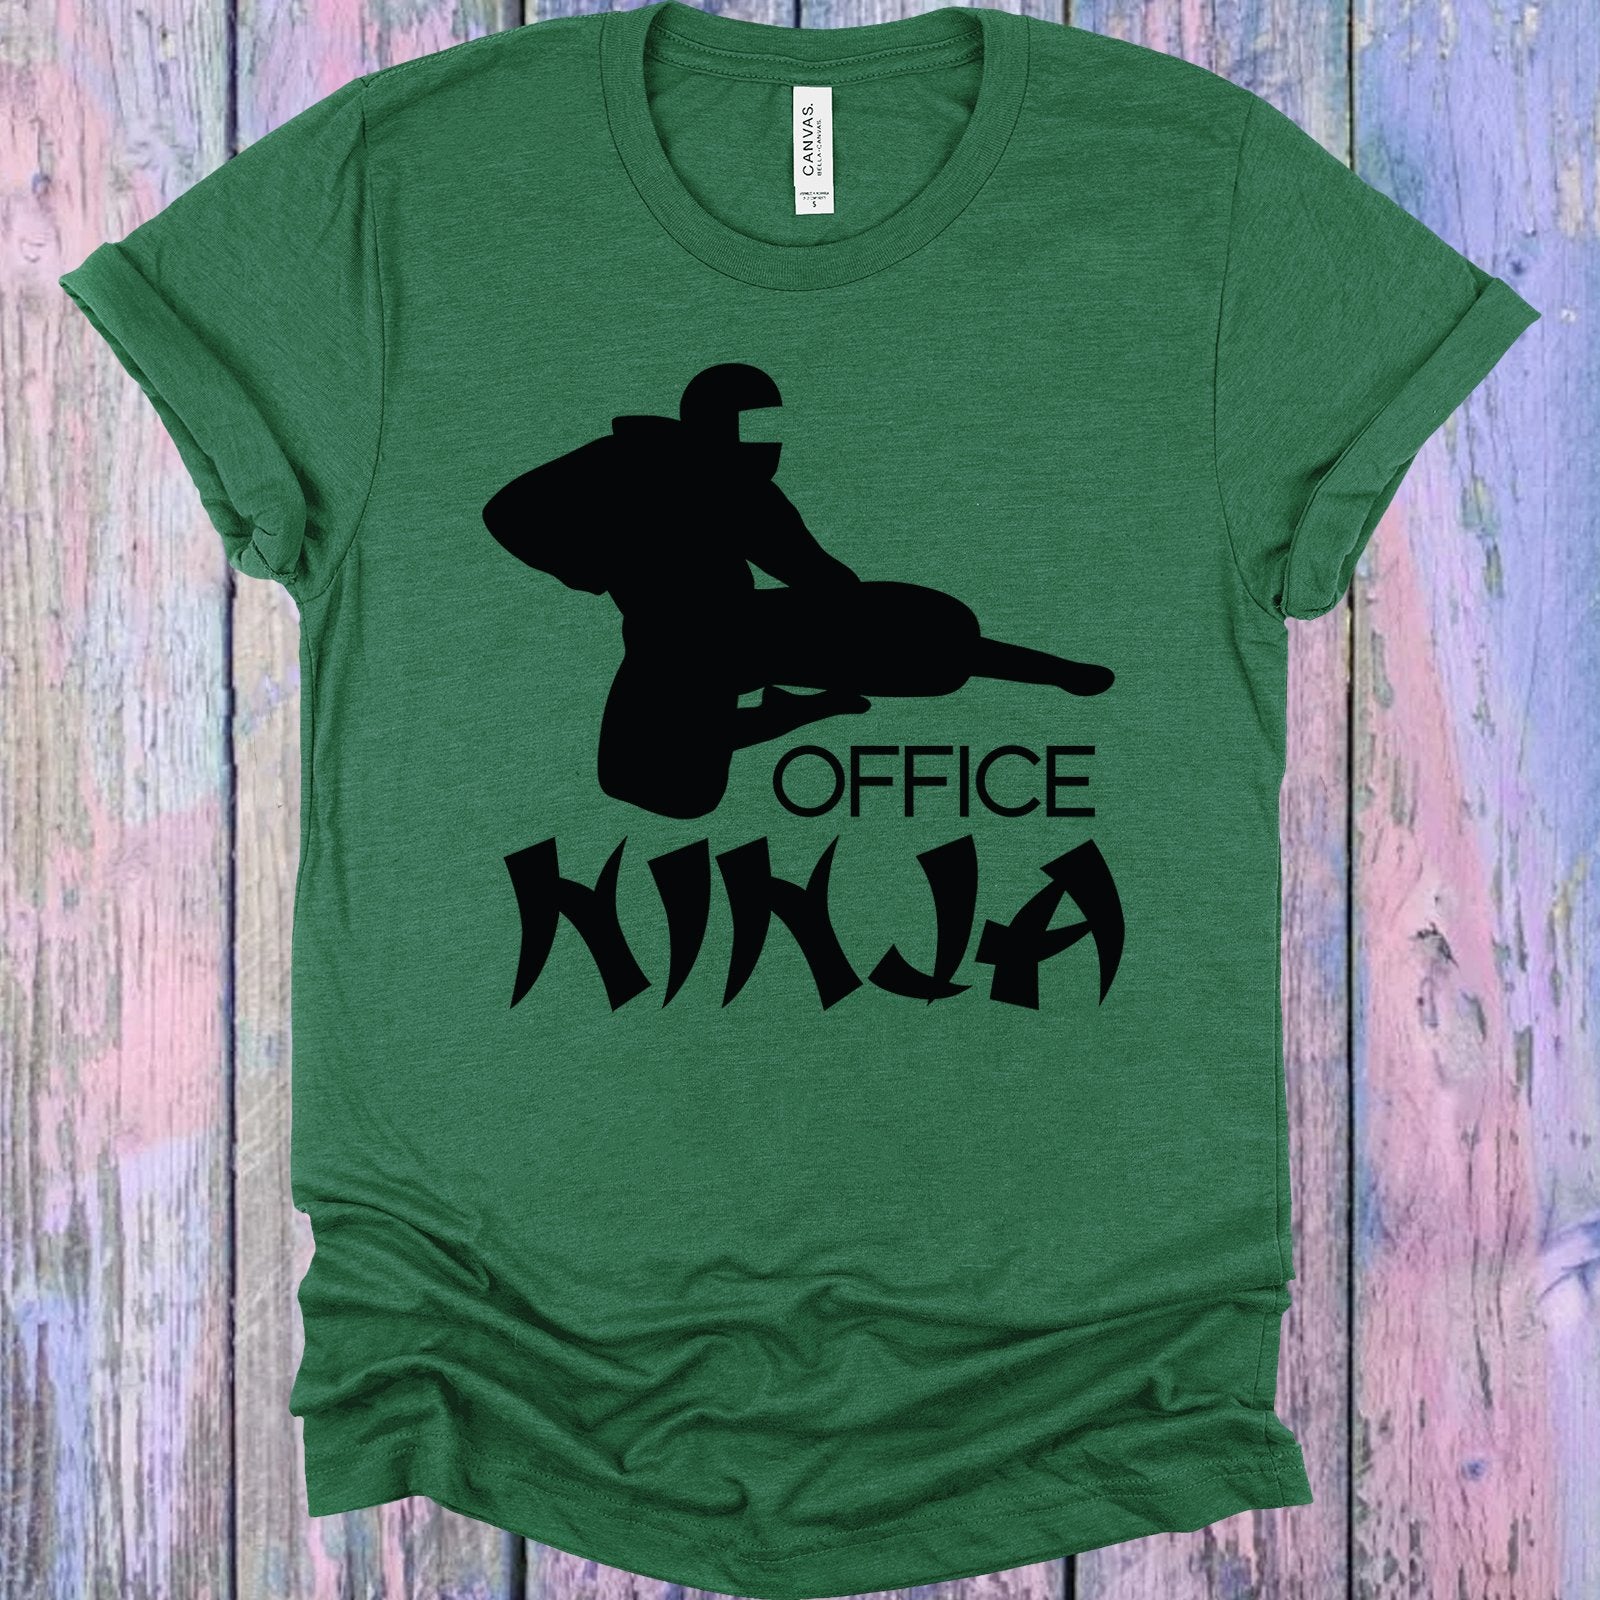 Office Ninja Graphic Tee Graphic Tee